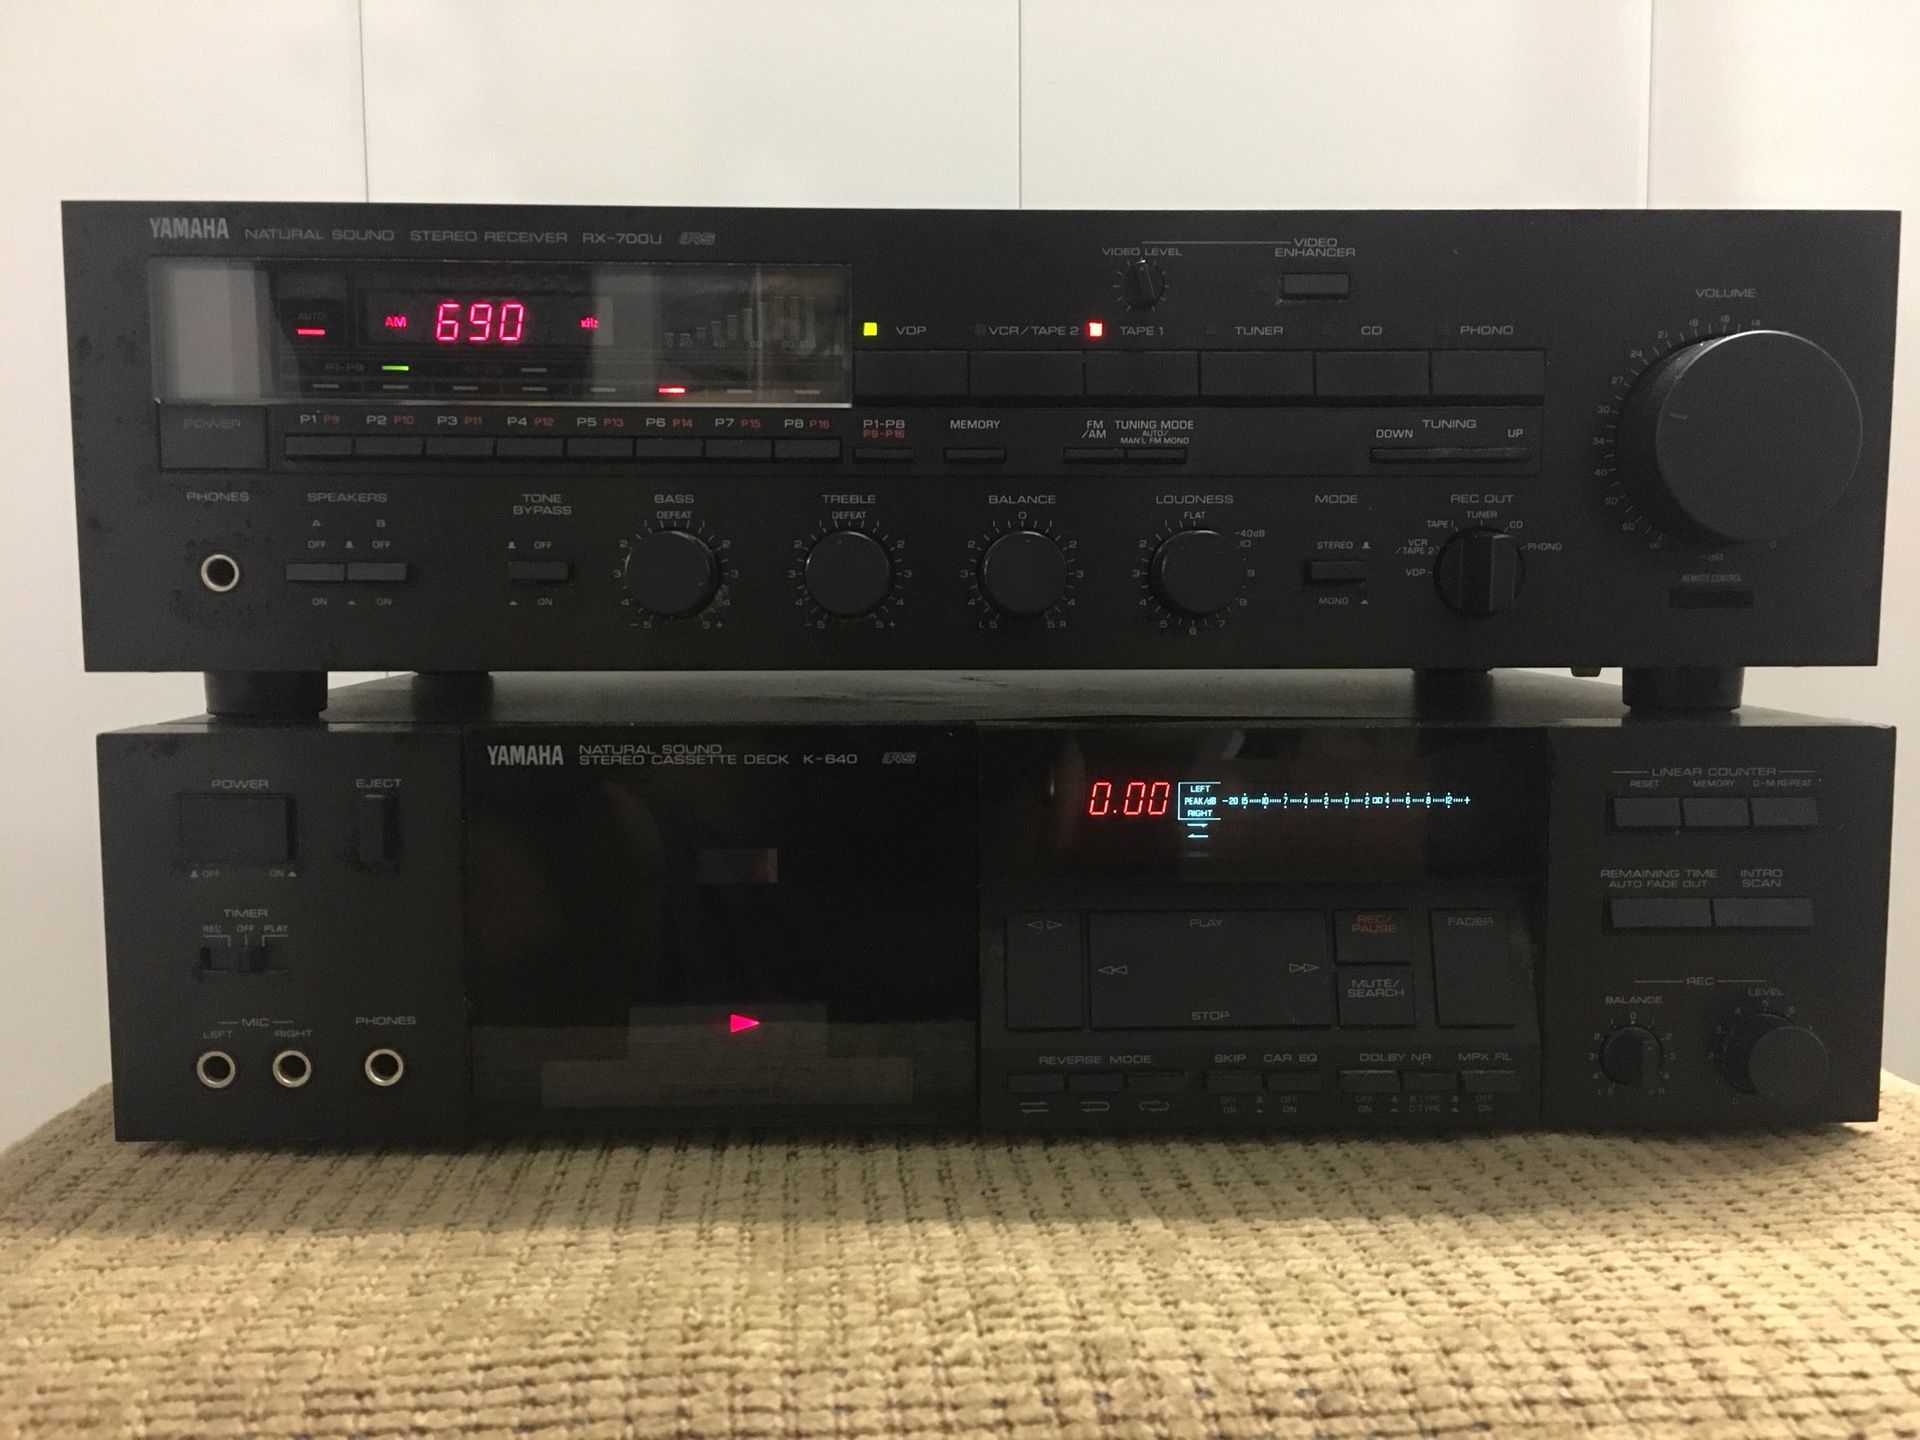 Yamaha K-640 Vintage Cassette Deck and Yamaha Yamaha RX-700U Stereo Receiver